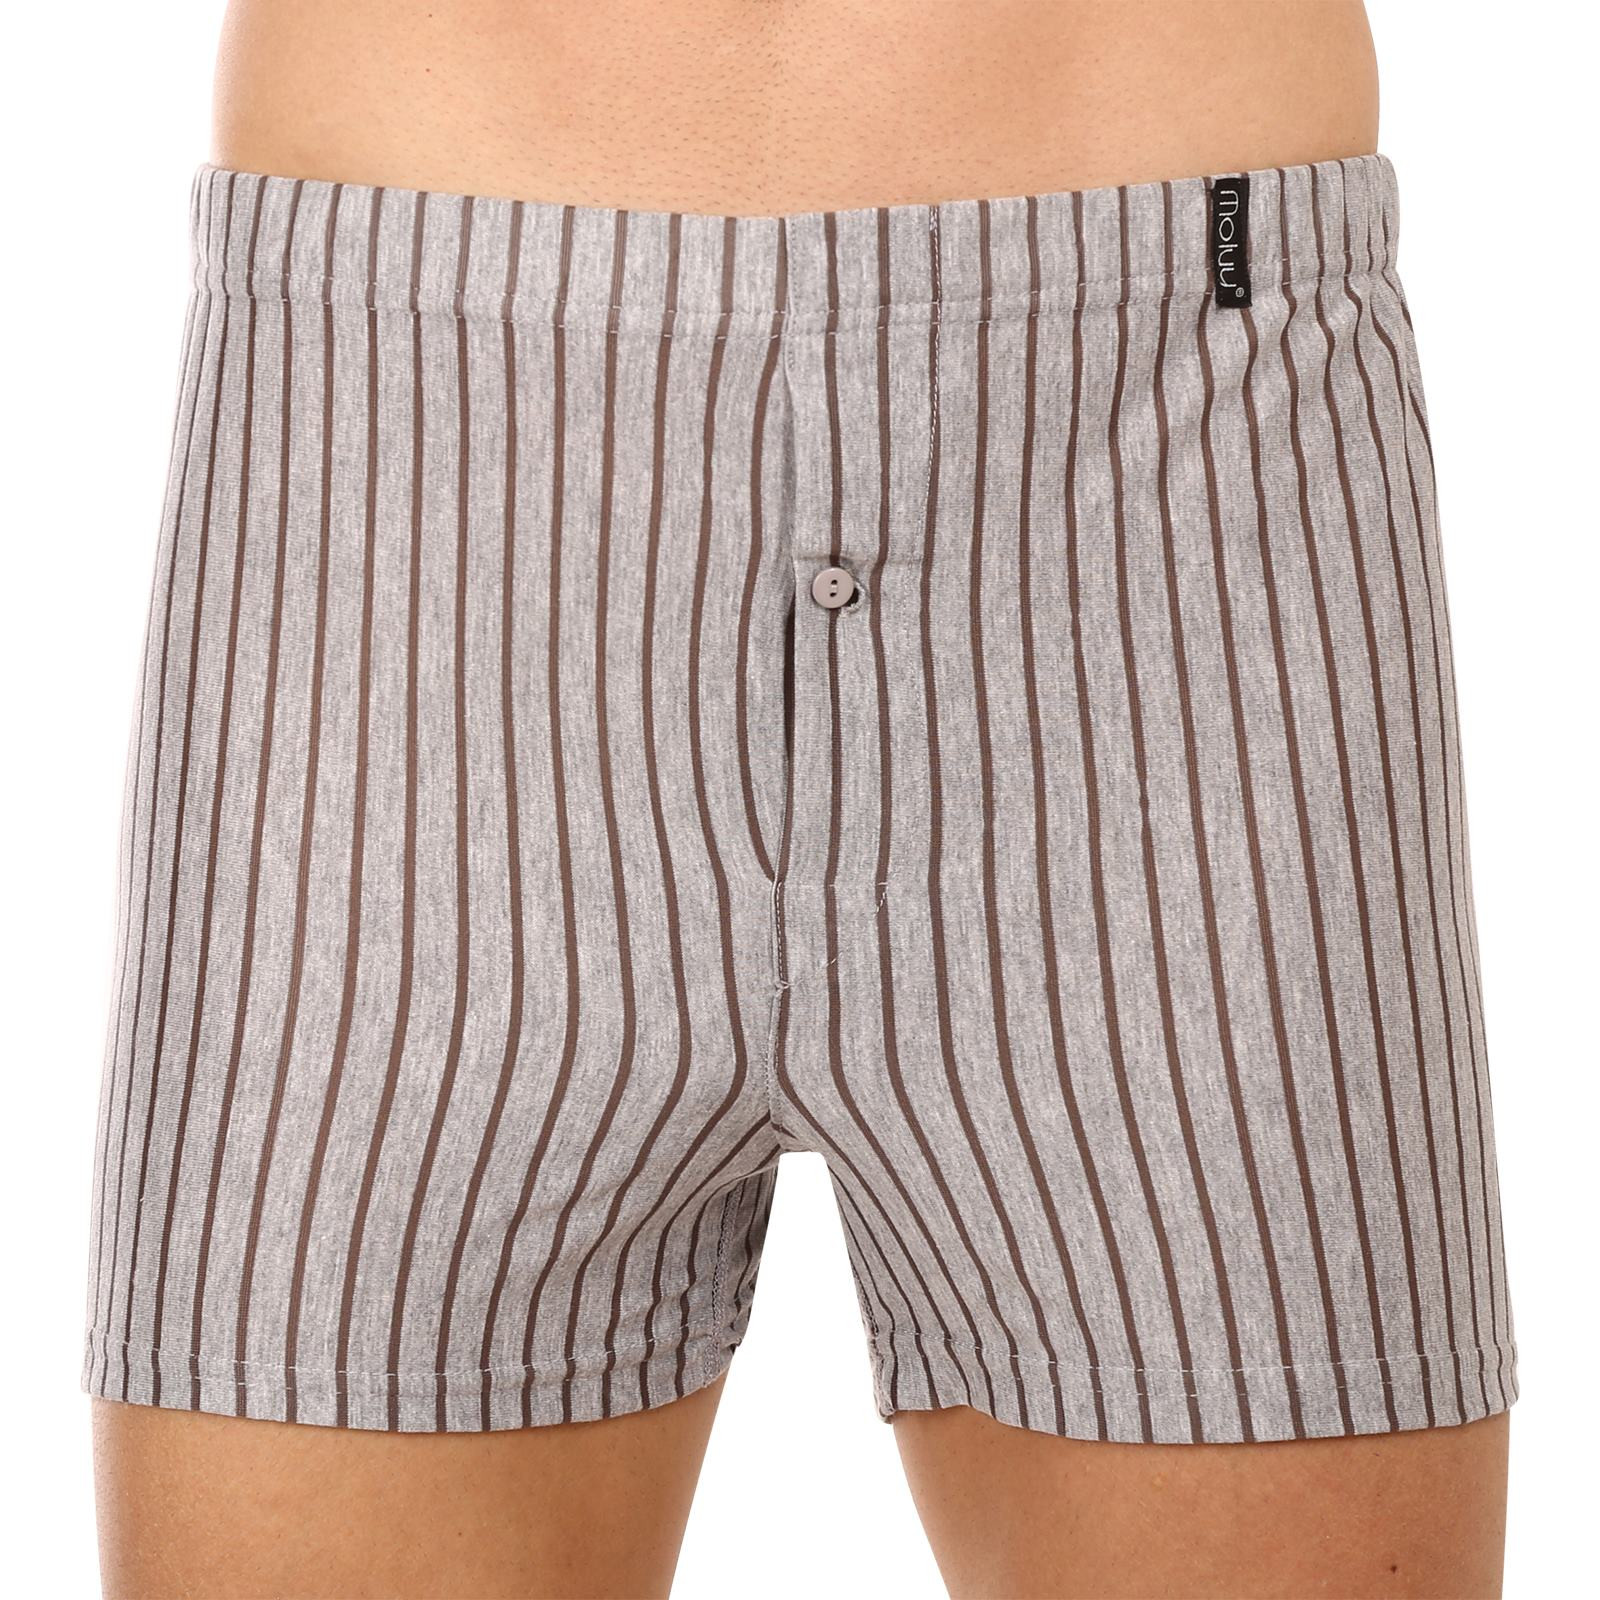 Men's shorts Molvy gray